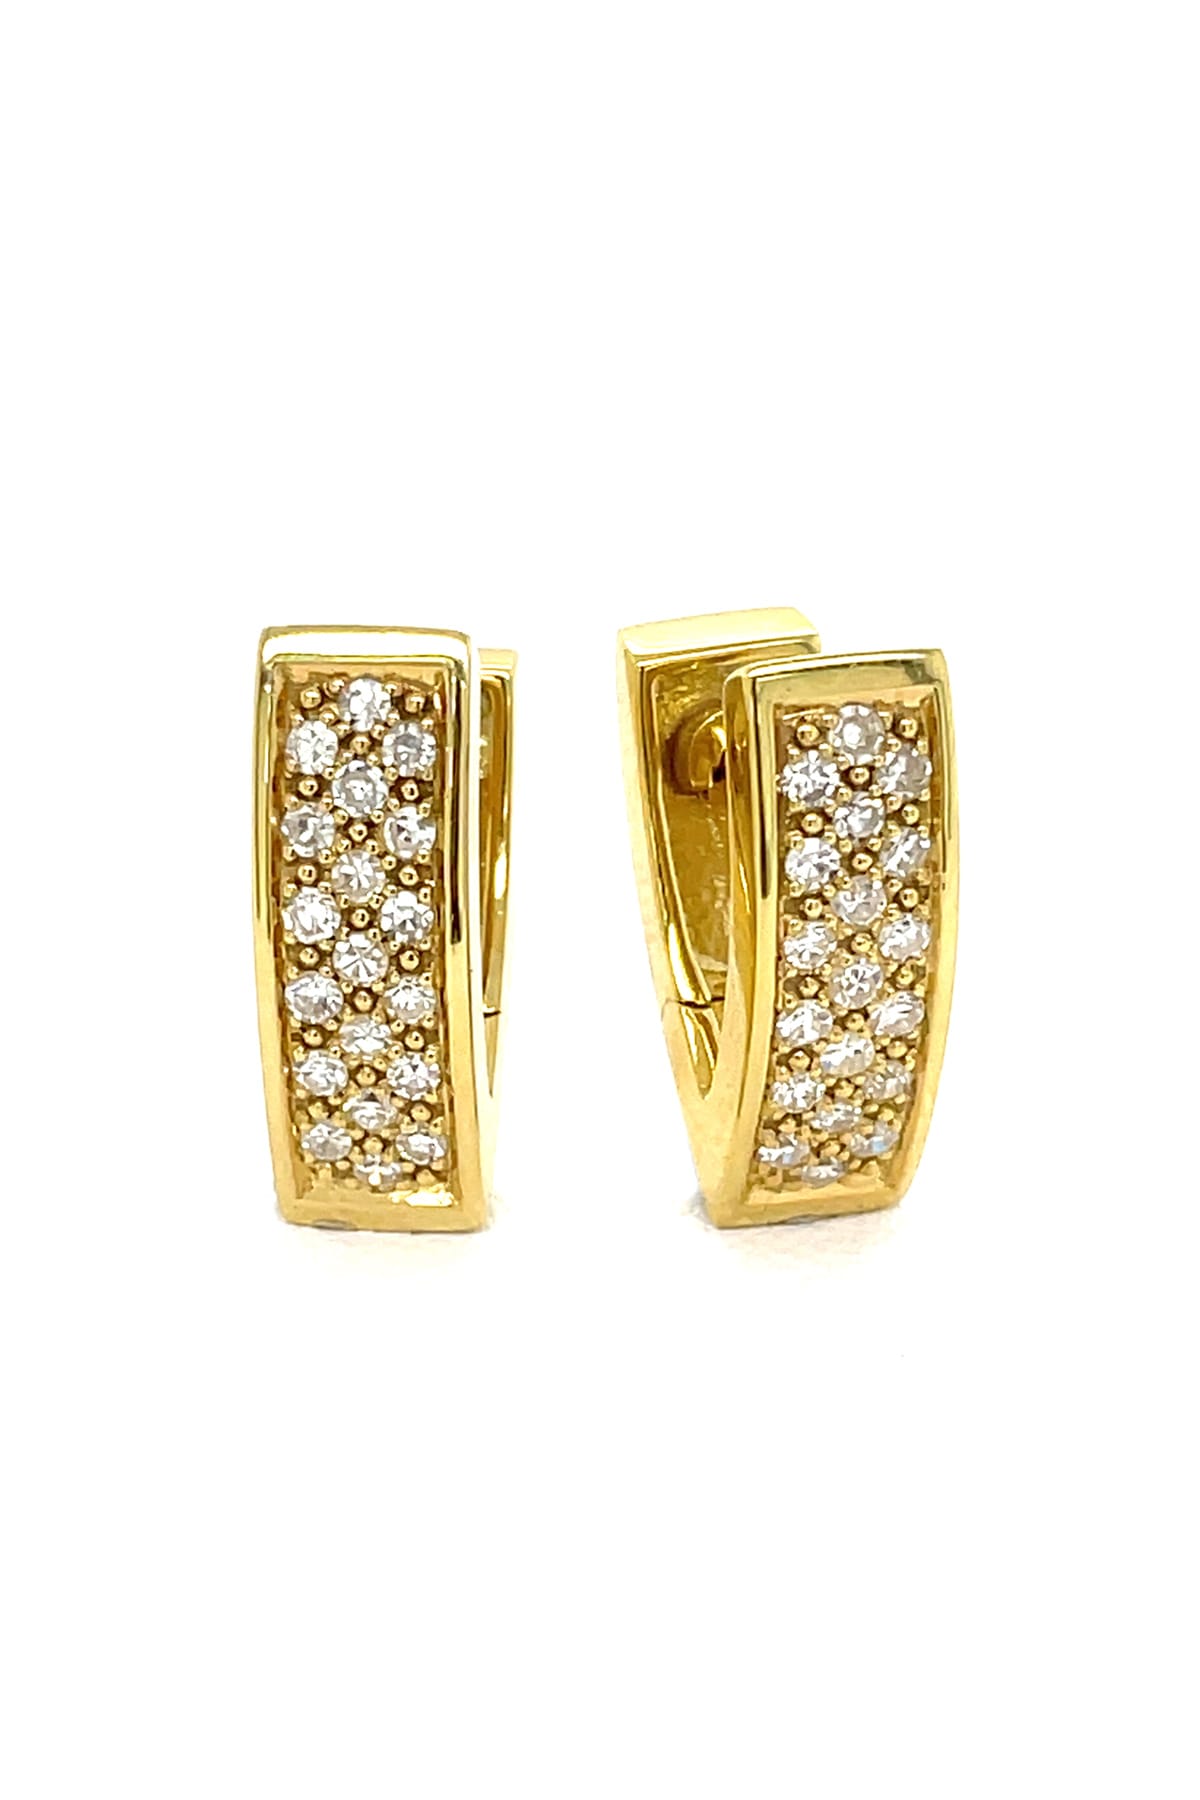 Gold Wide Pavé Set Diamond Huggie Earrings available at LeGassick Diamonds and Jewellery Gold Coast, Australia.